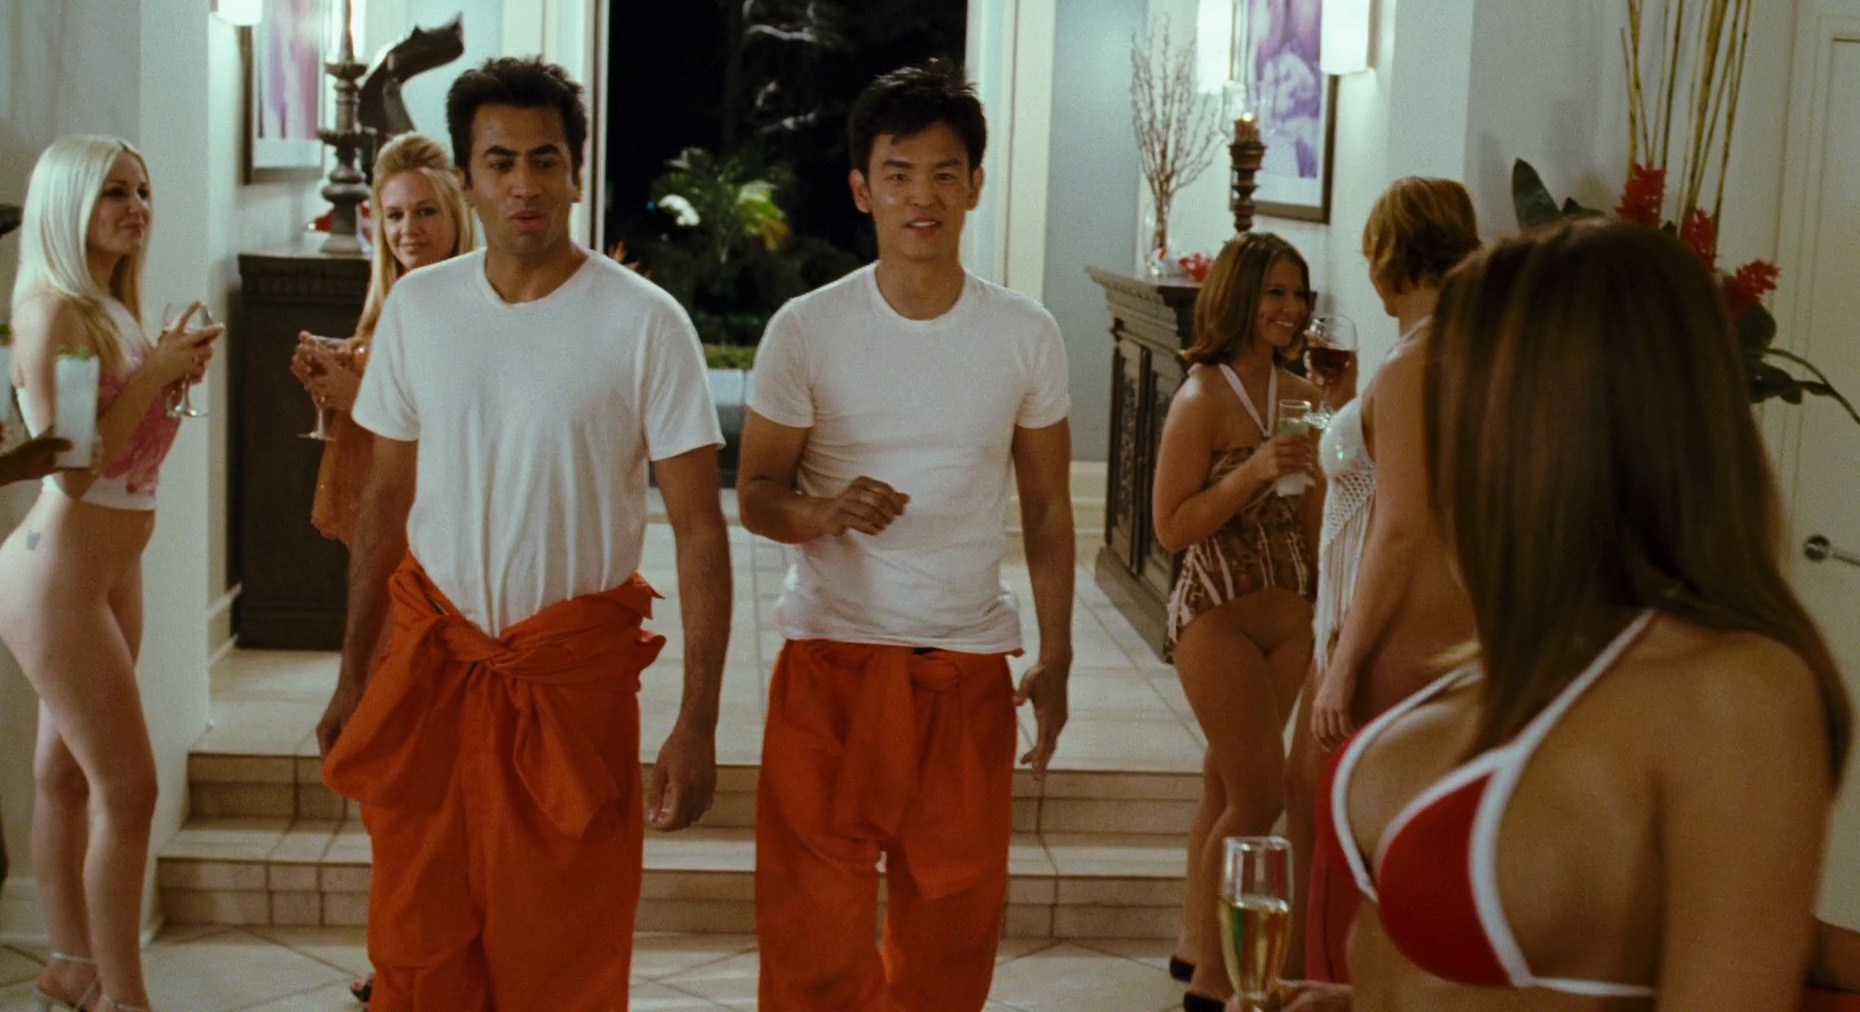 Harold & Kumar Escape from Guantanamo Bay nude pics.